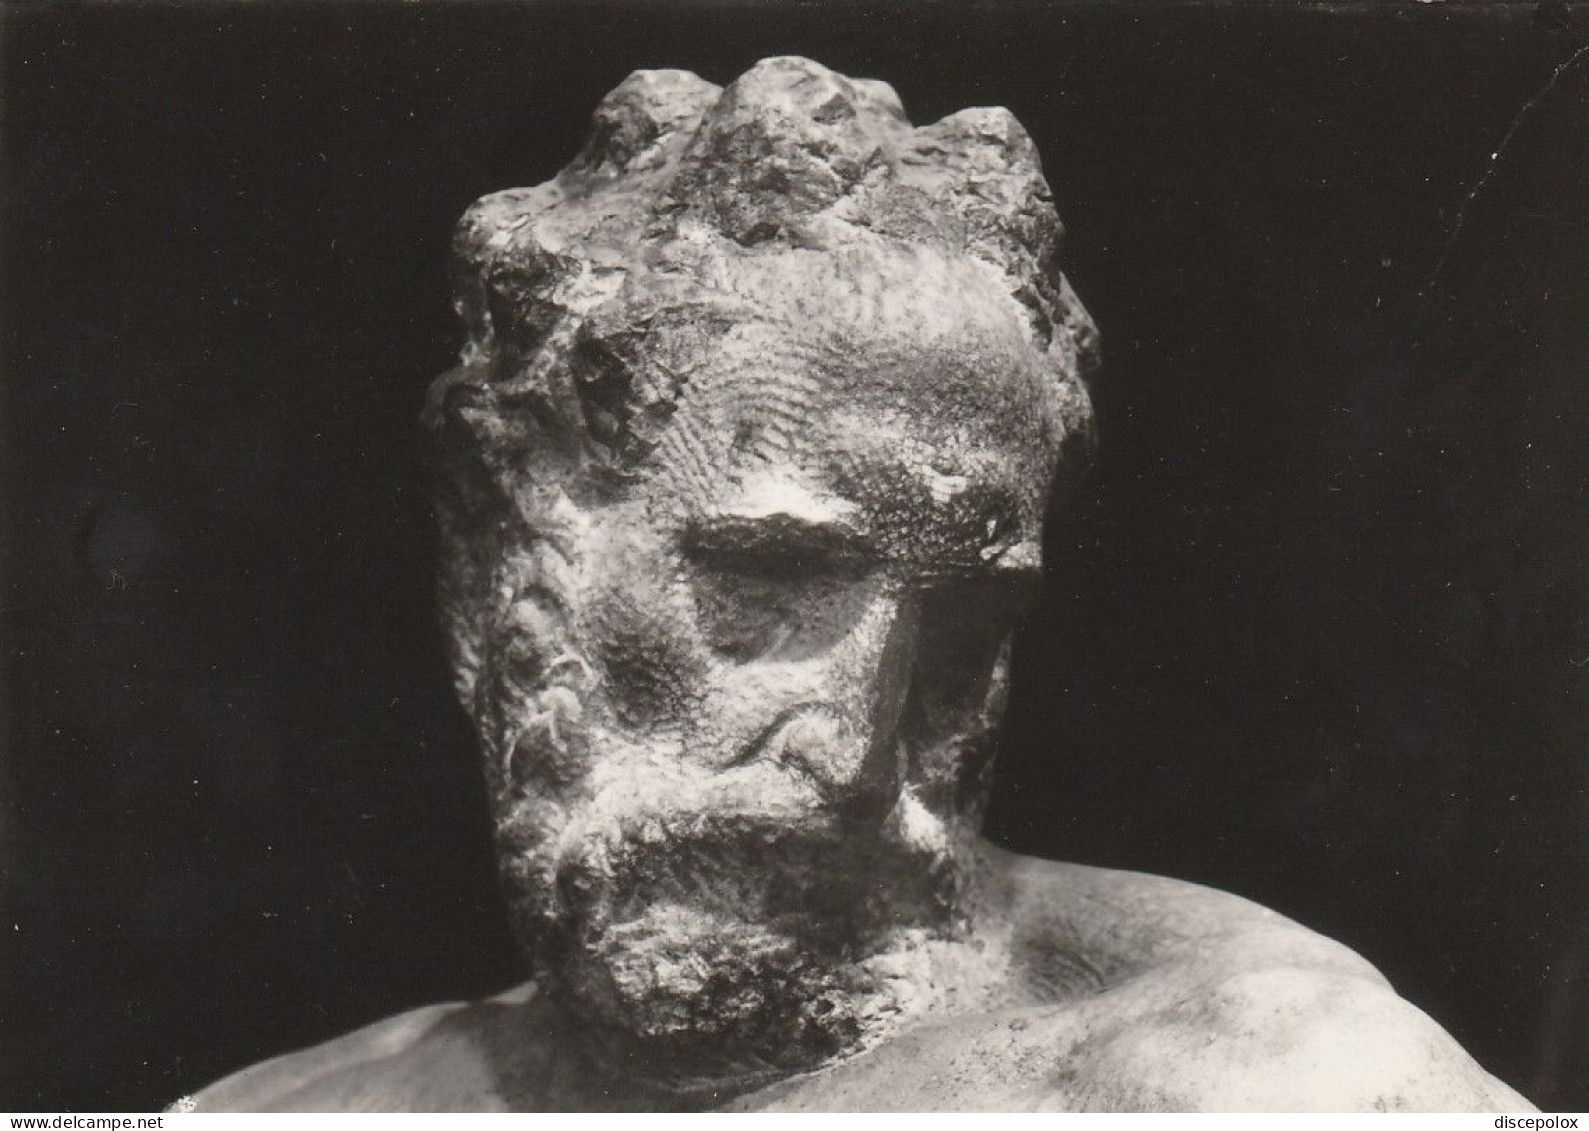 AD520 Michelangelo - Il Crepuscolo - Firenze - Cappelle Medicee - Scultura Sculpture - Sculptures